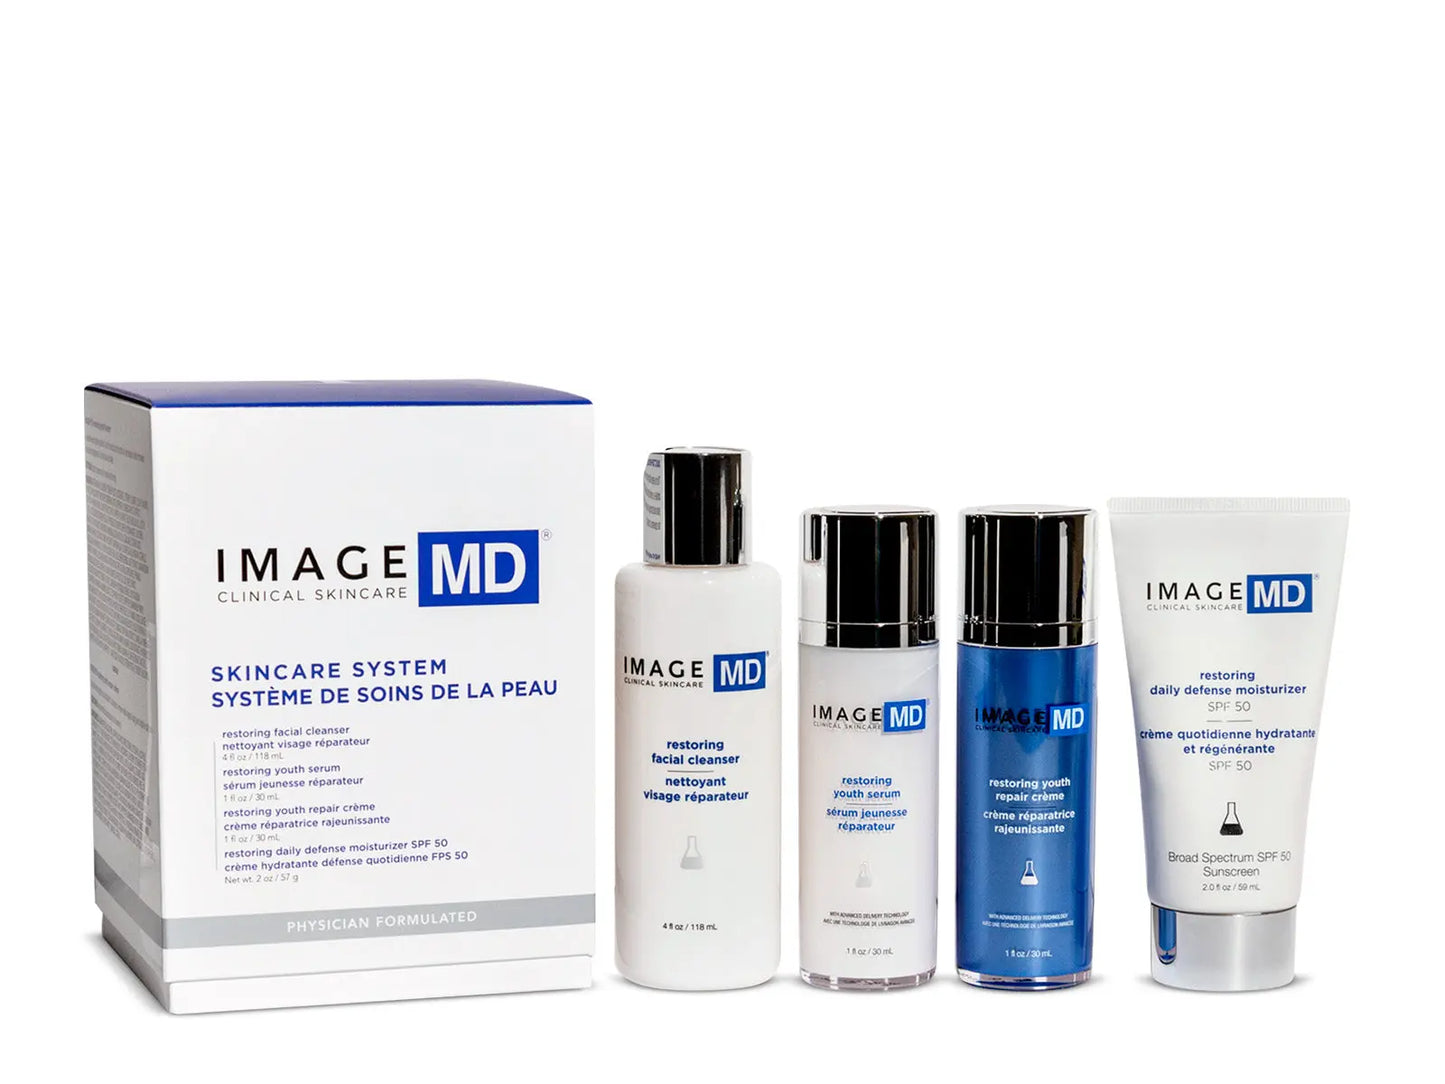 IMAGE MD Skincare System IMAGE